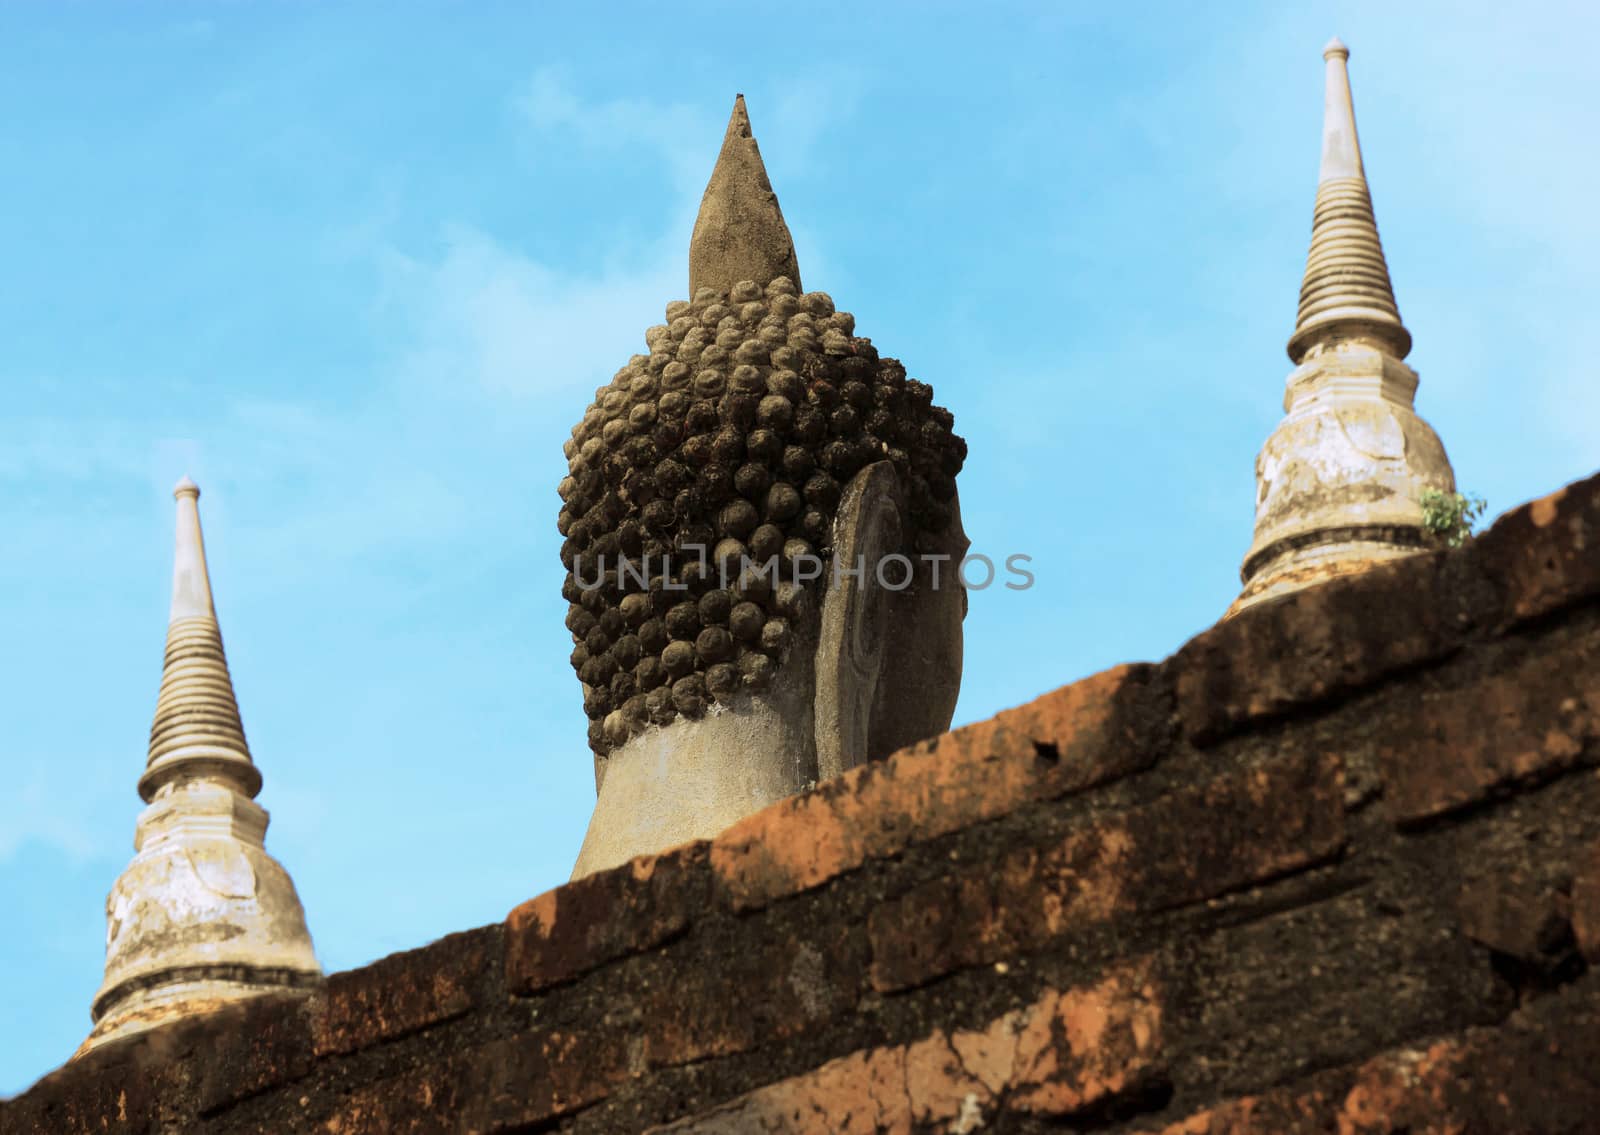 Buddha's head from back - ayutthaya Thailand by sutipp11